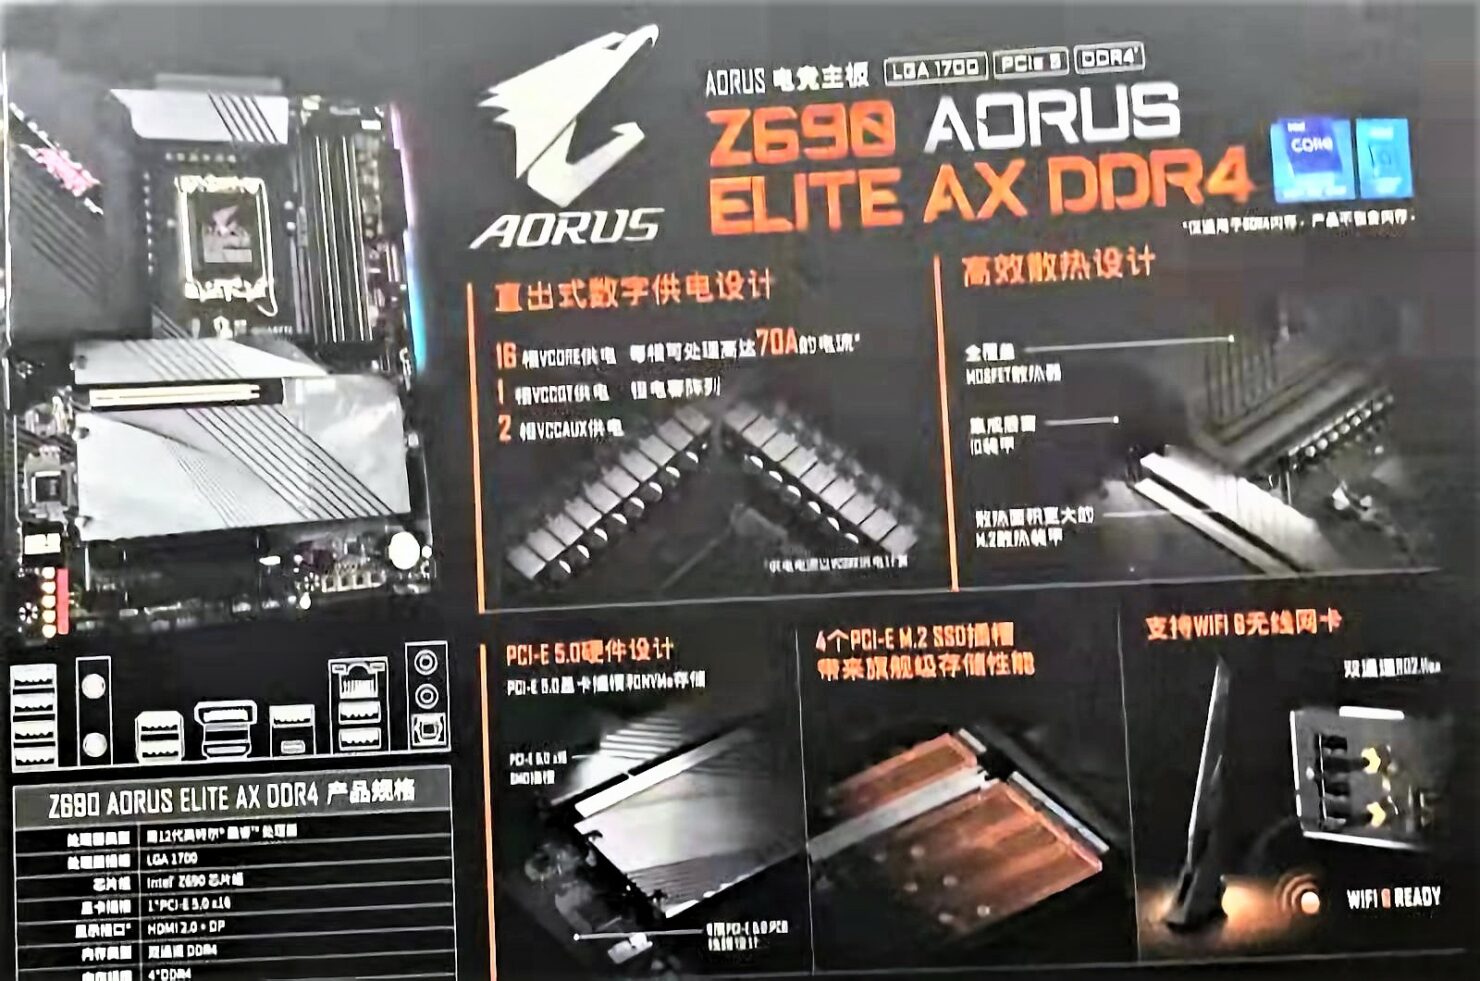 Gigabyte-Z690-AORUS-Elite-AX-DDR4-Motherboard-For-Intel-Alder-Lake-Desktop-CPUs-1-1480x981.jpg